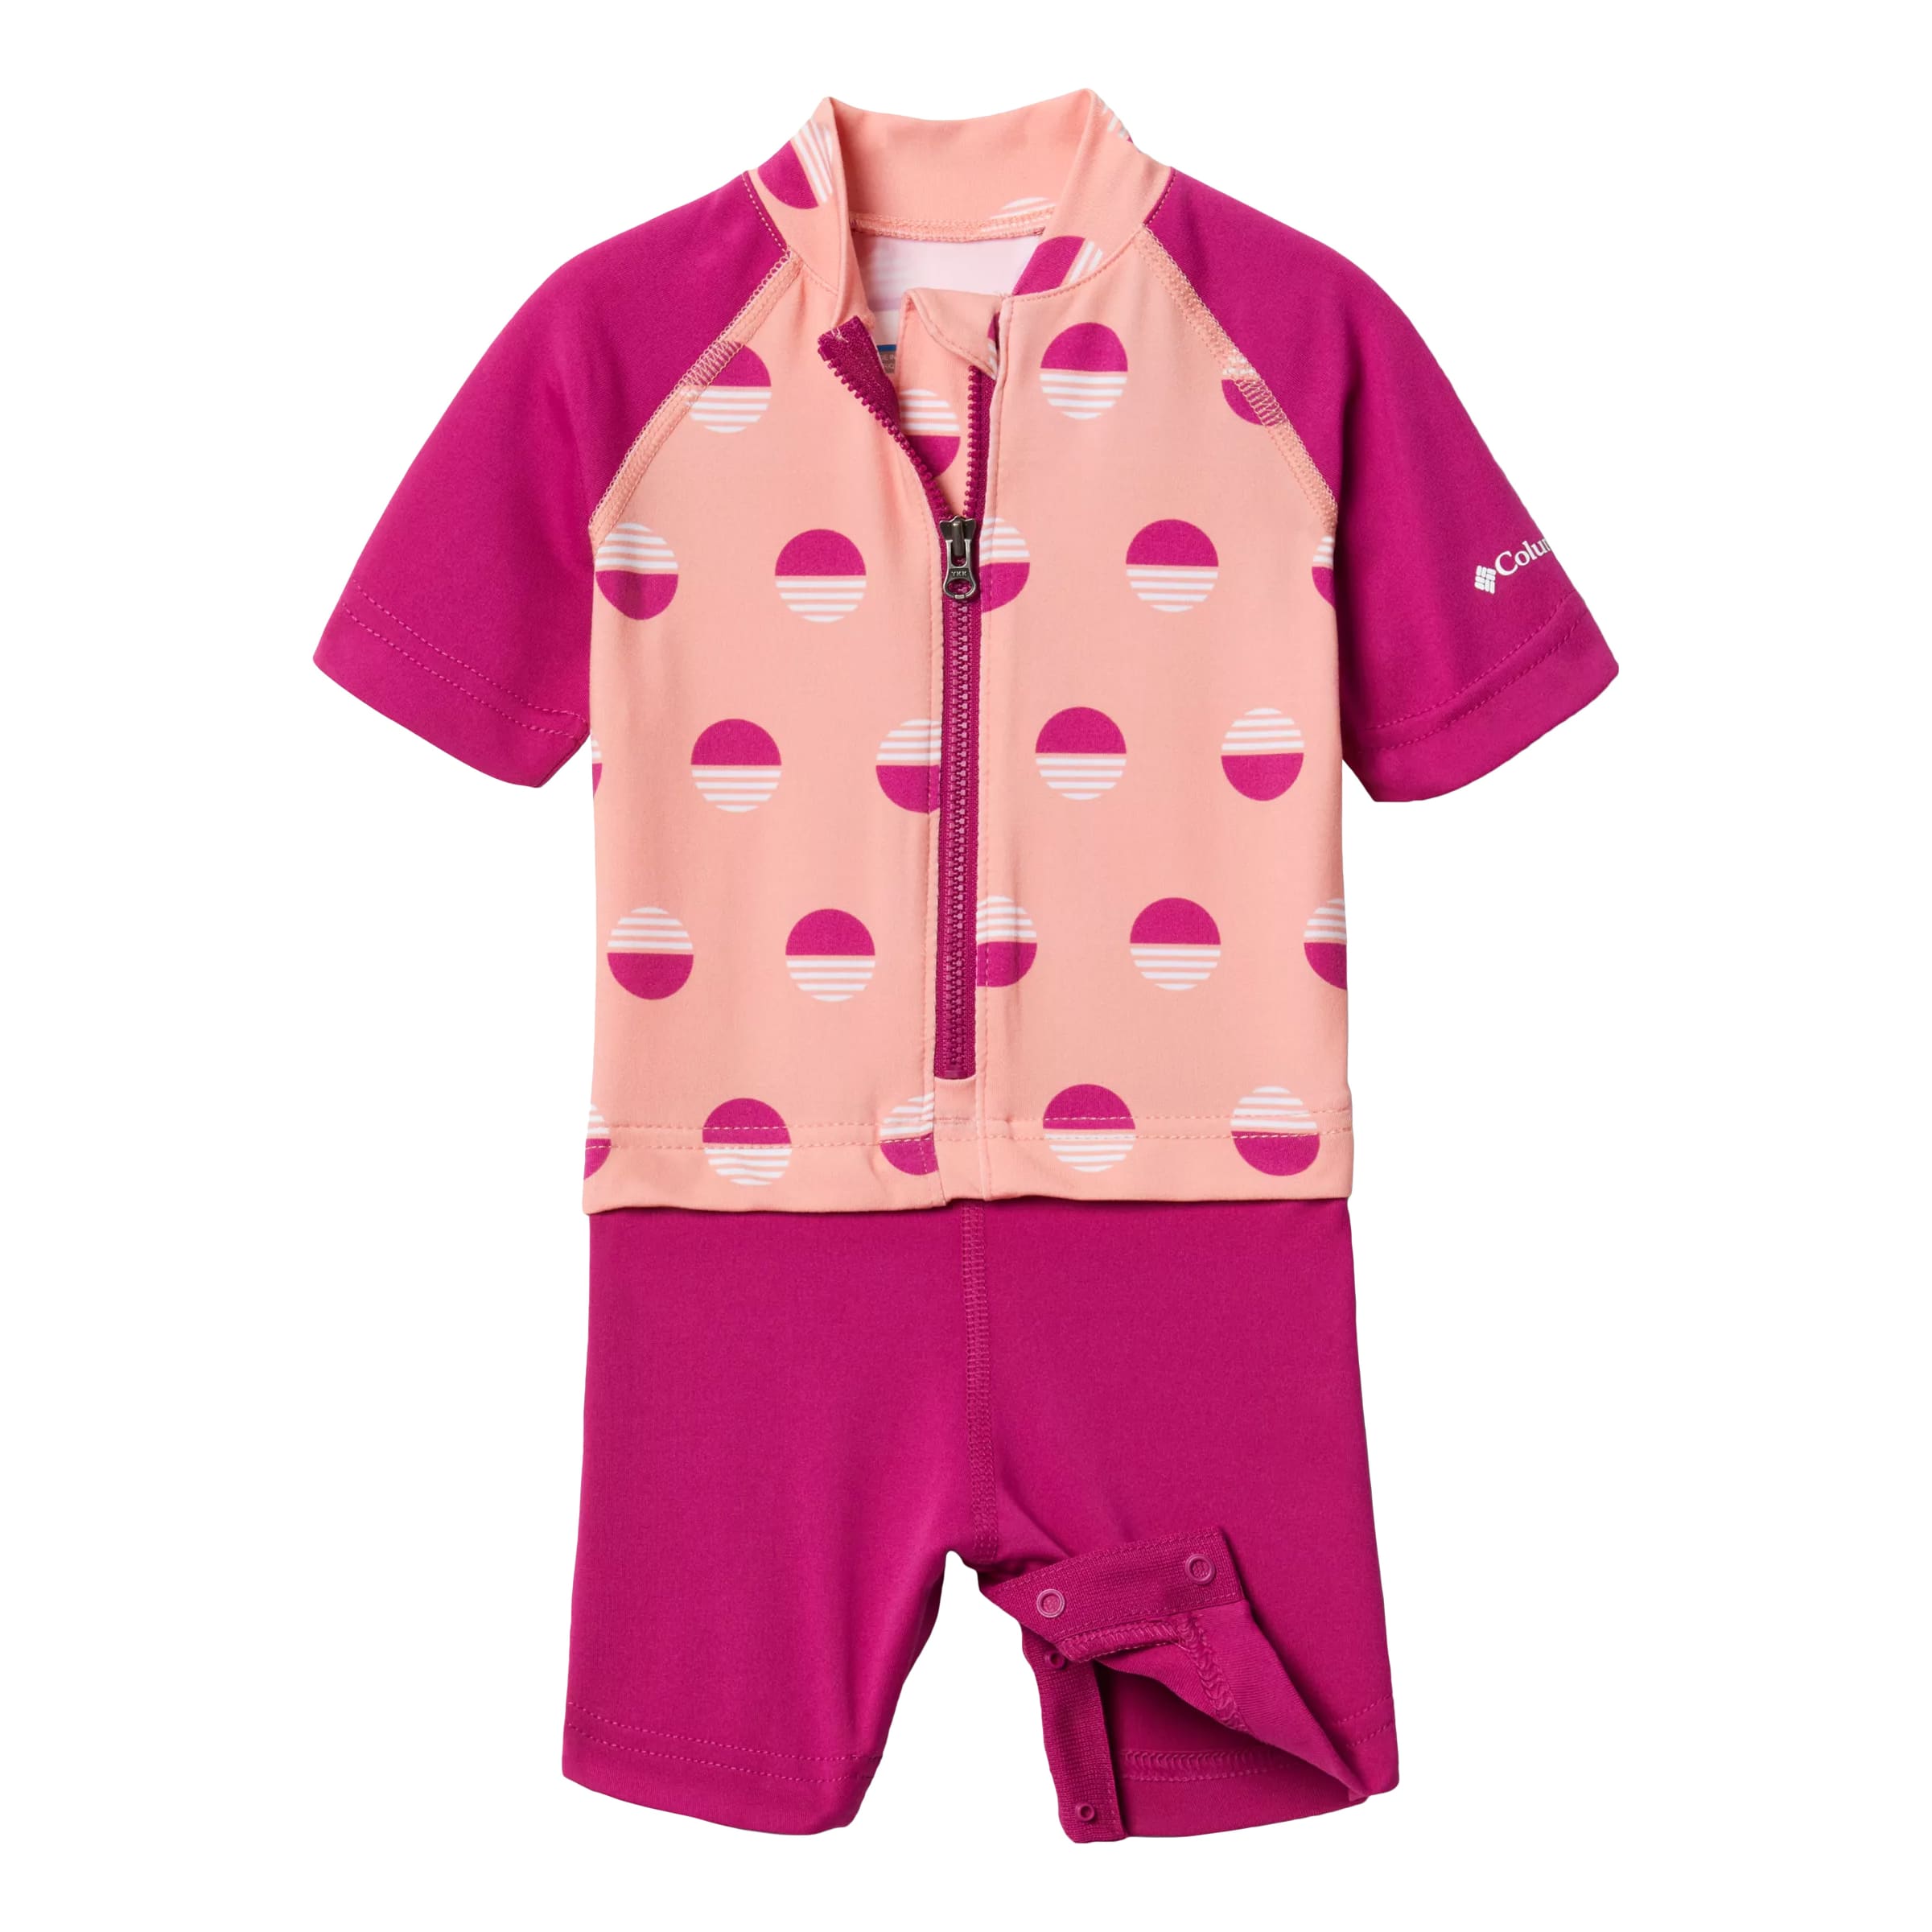 Columbia™ Infant Girls’ Sandy Shores™ Sunguard Suit - Coral Reef Sundaze/Deep Fuchsia